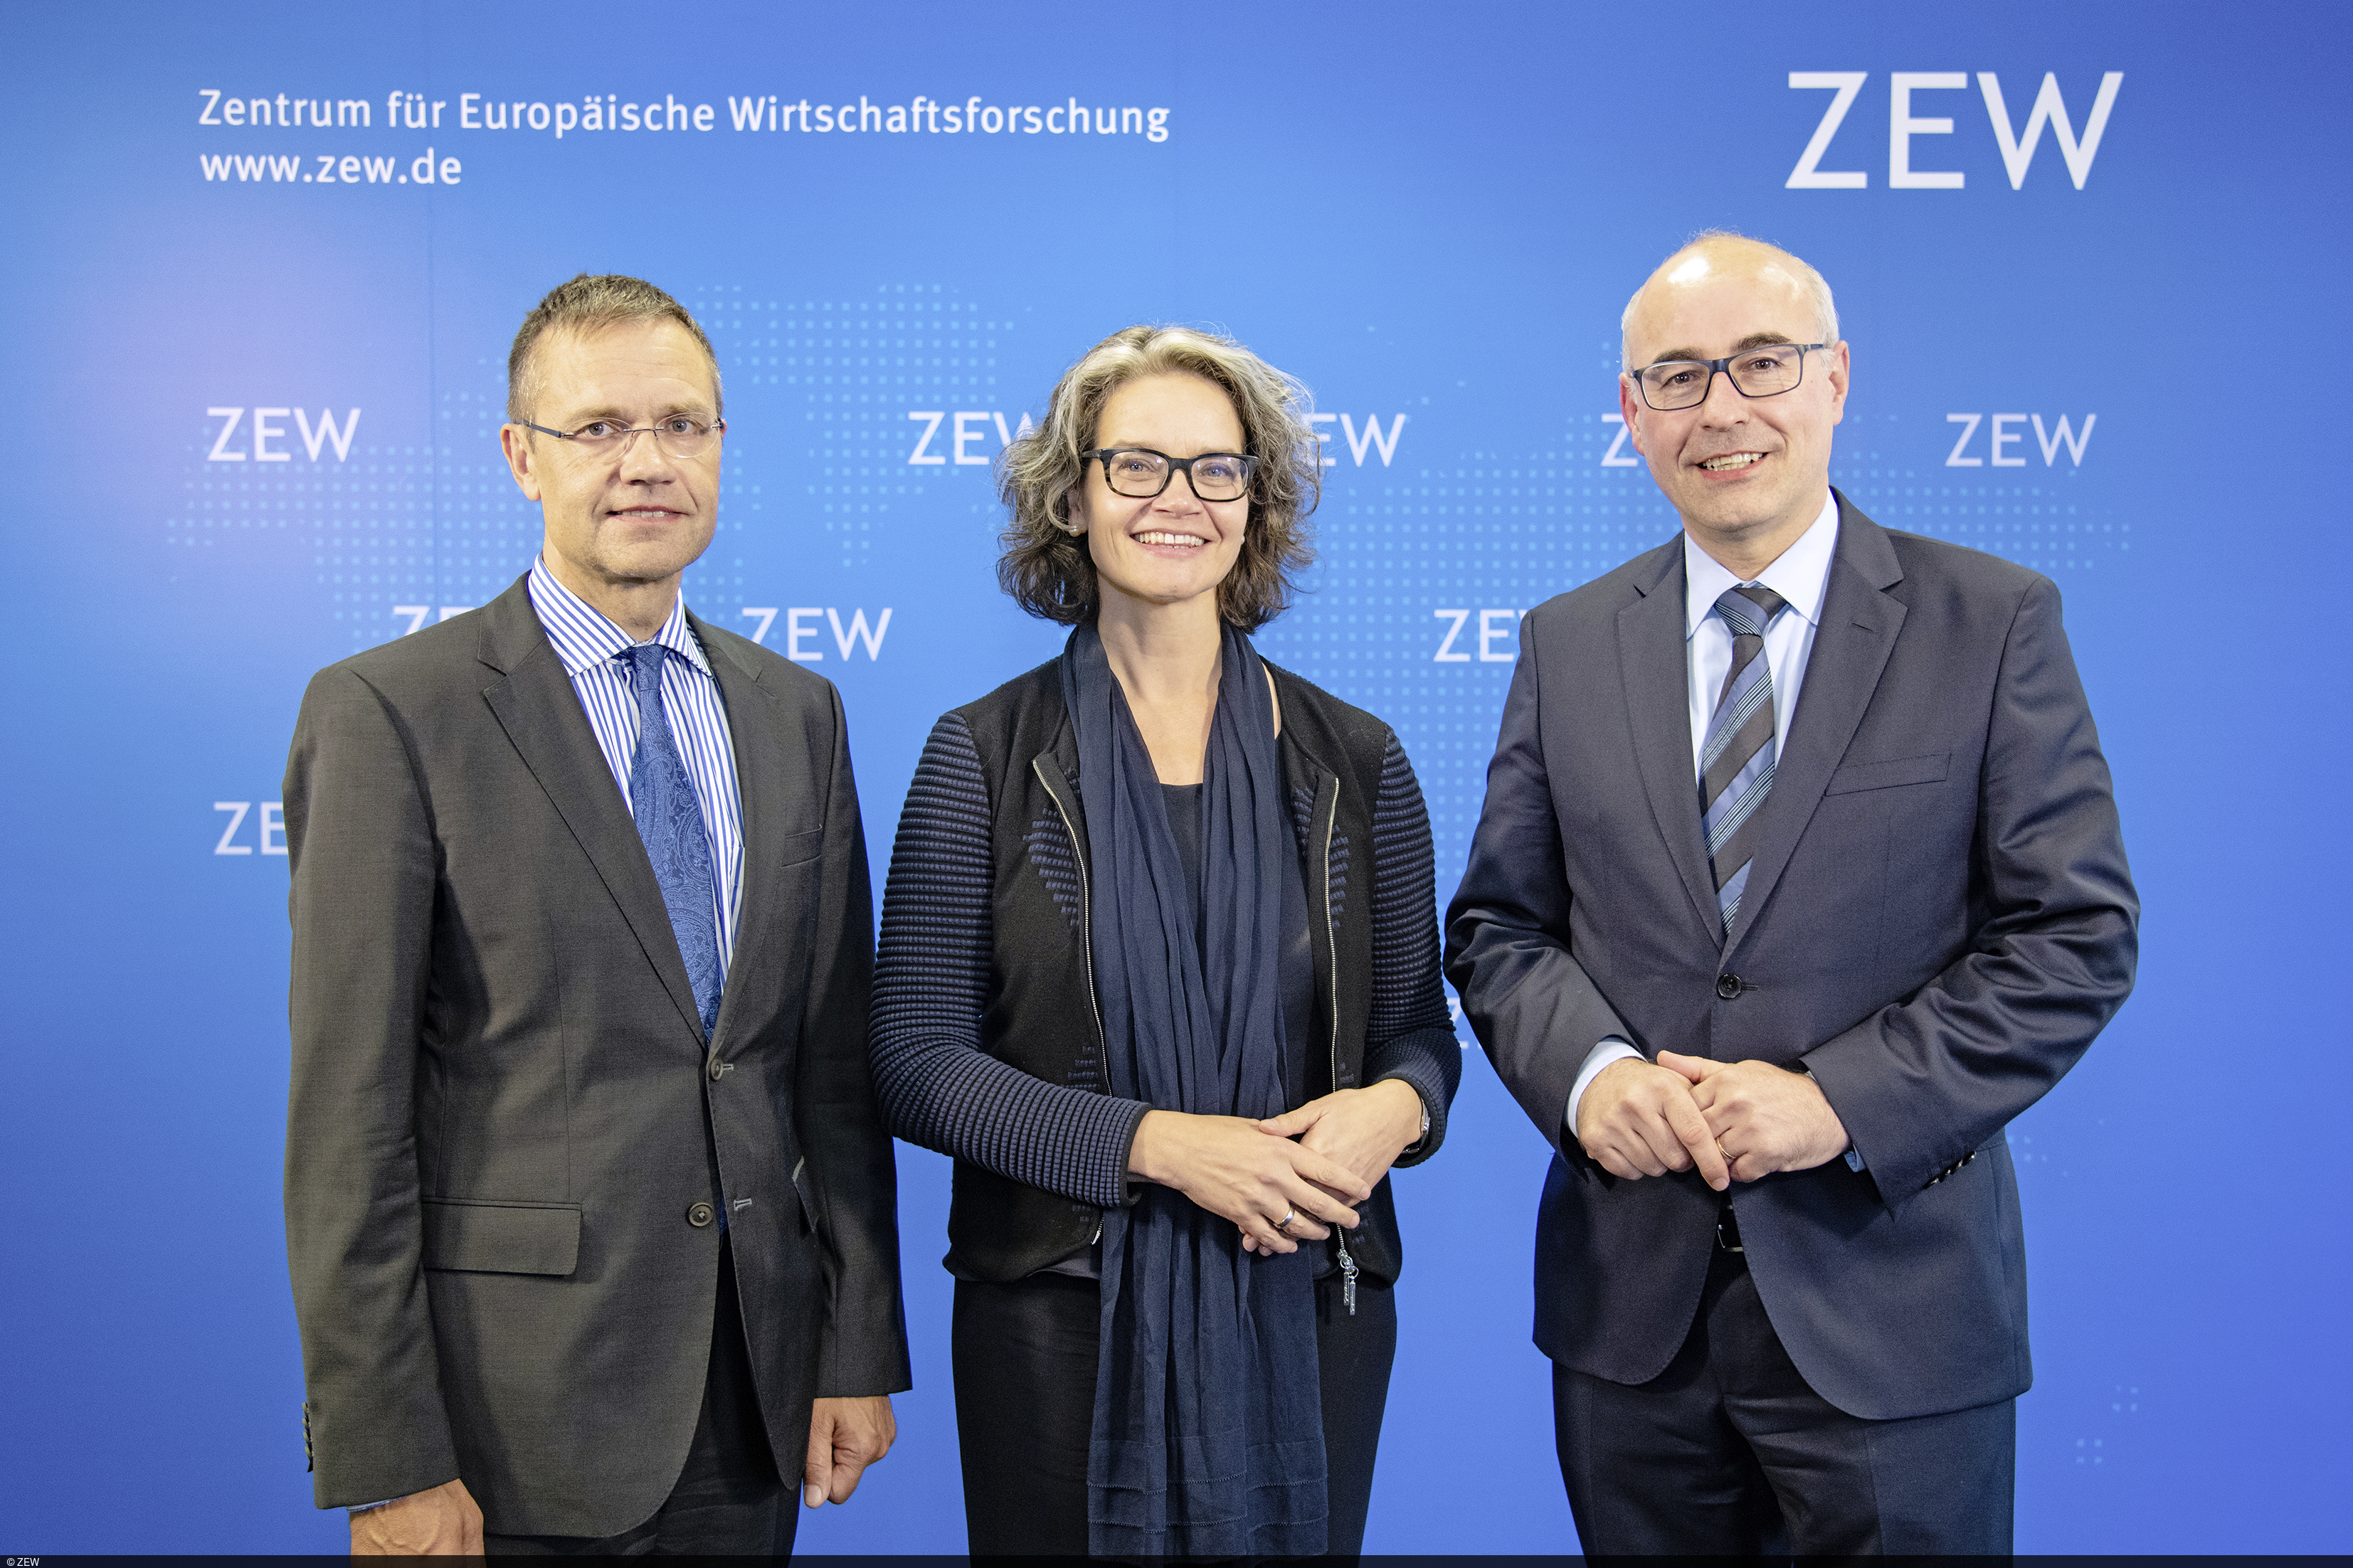 Telekom board member Claudia Nemat is welcomed as guest speaker at ZEW.